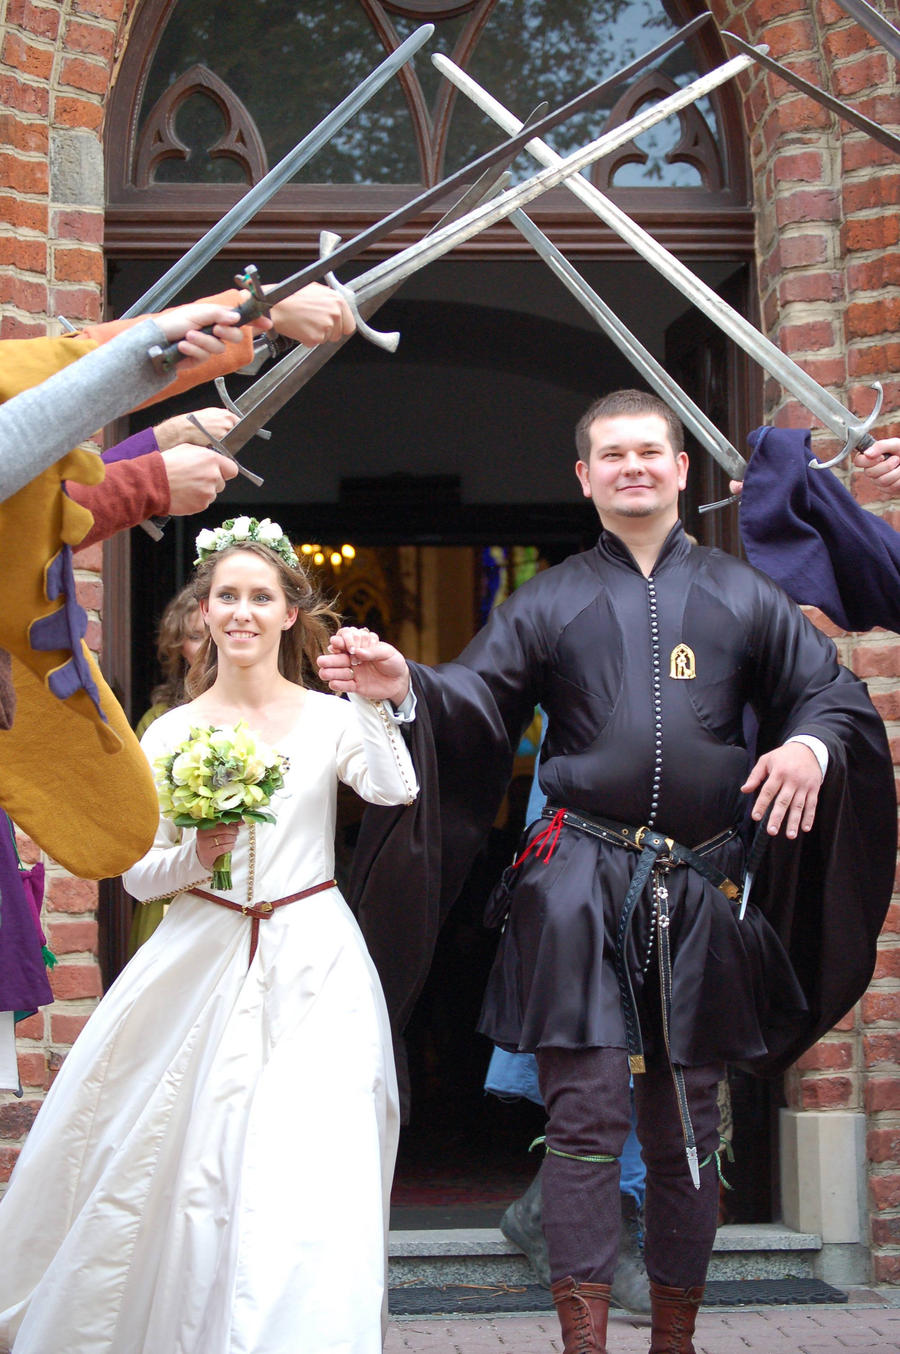 https://img00.deviantart.net/6dd9/i/2011/262/e/1/medieval_wedding_by_m_n_m_s-d4ab5sx.jpg